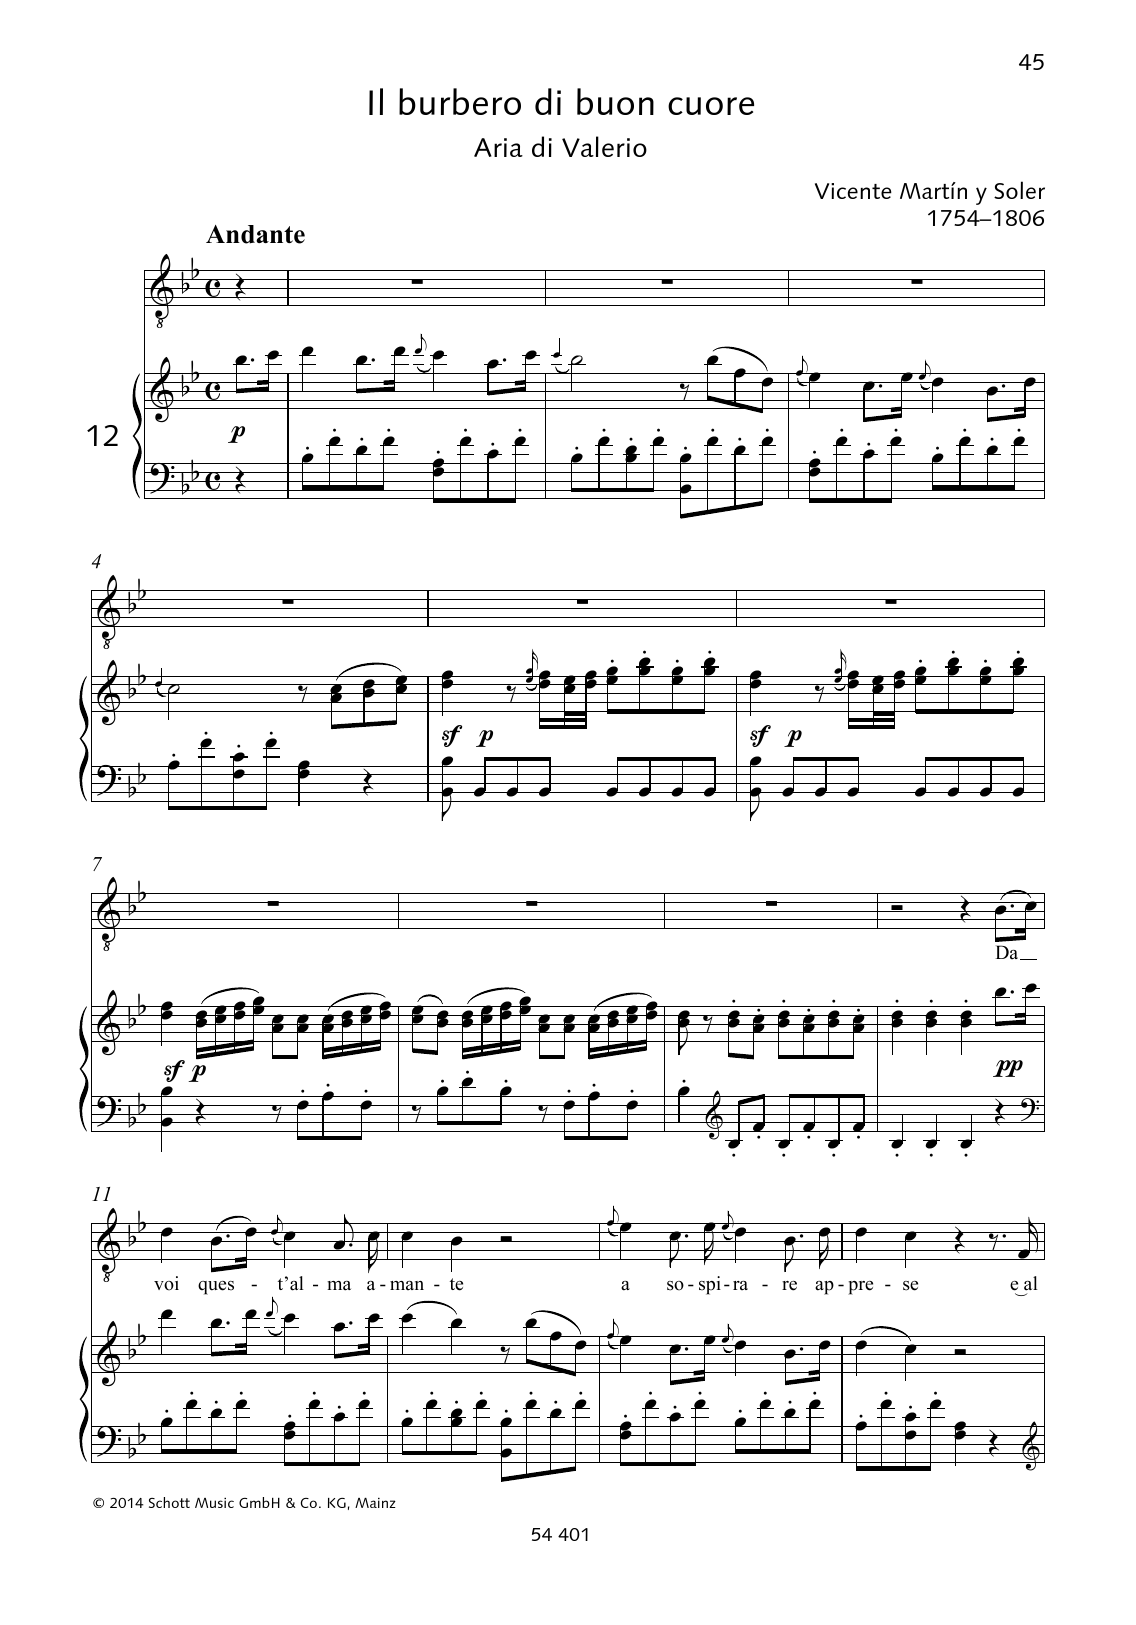 Vincente Martin Y Soler Da voi quest'alma amante sheet music notes and chords. Download Printable PDF.